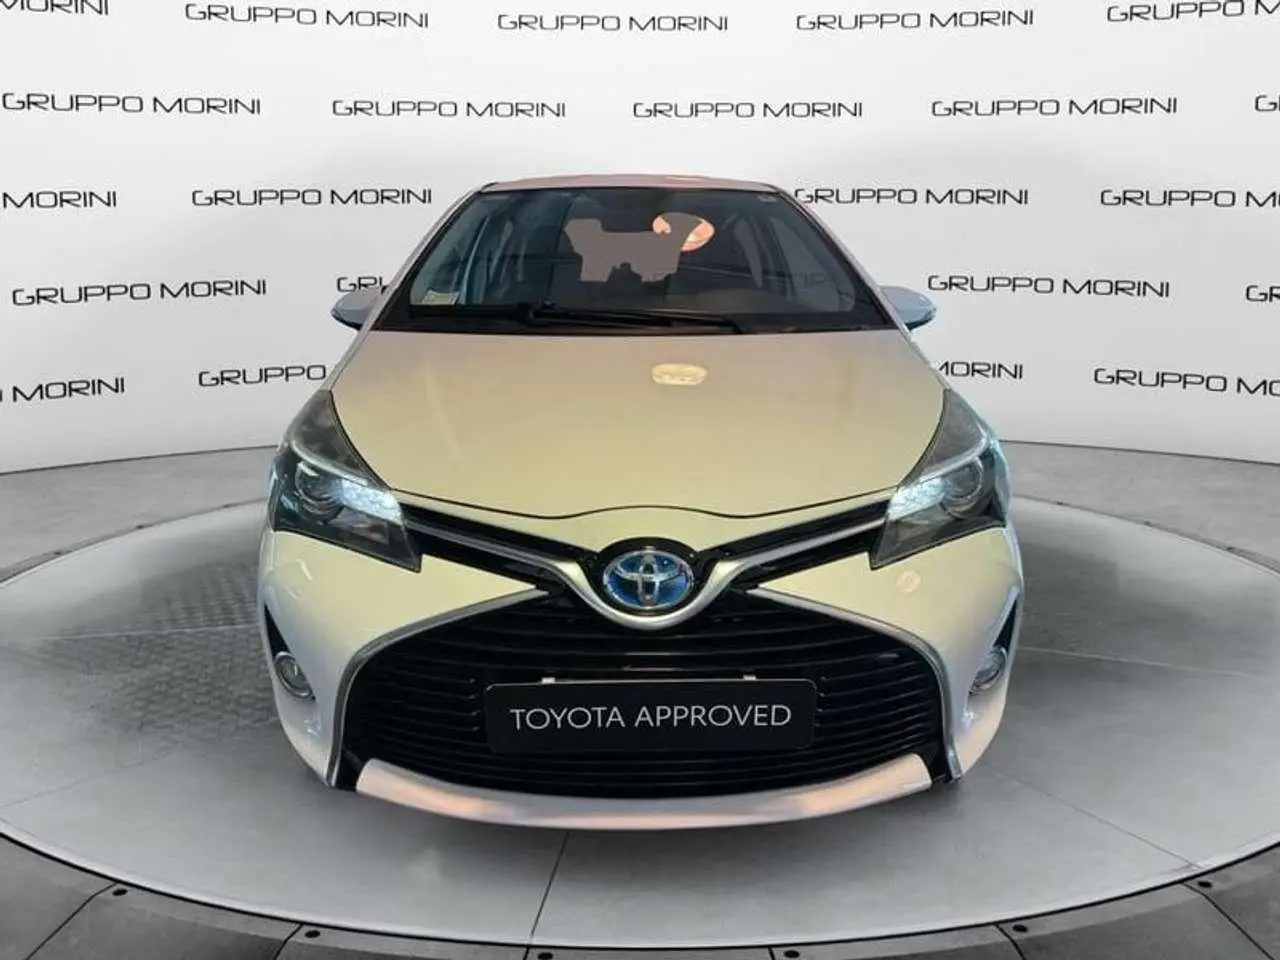 Photo 1 : Toyota Yaris 2015 Hybride